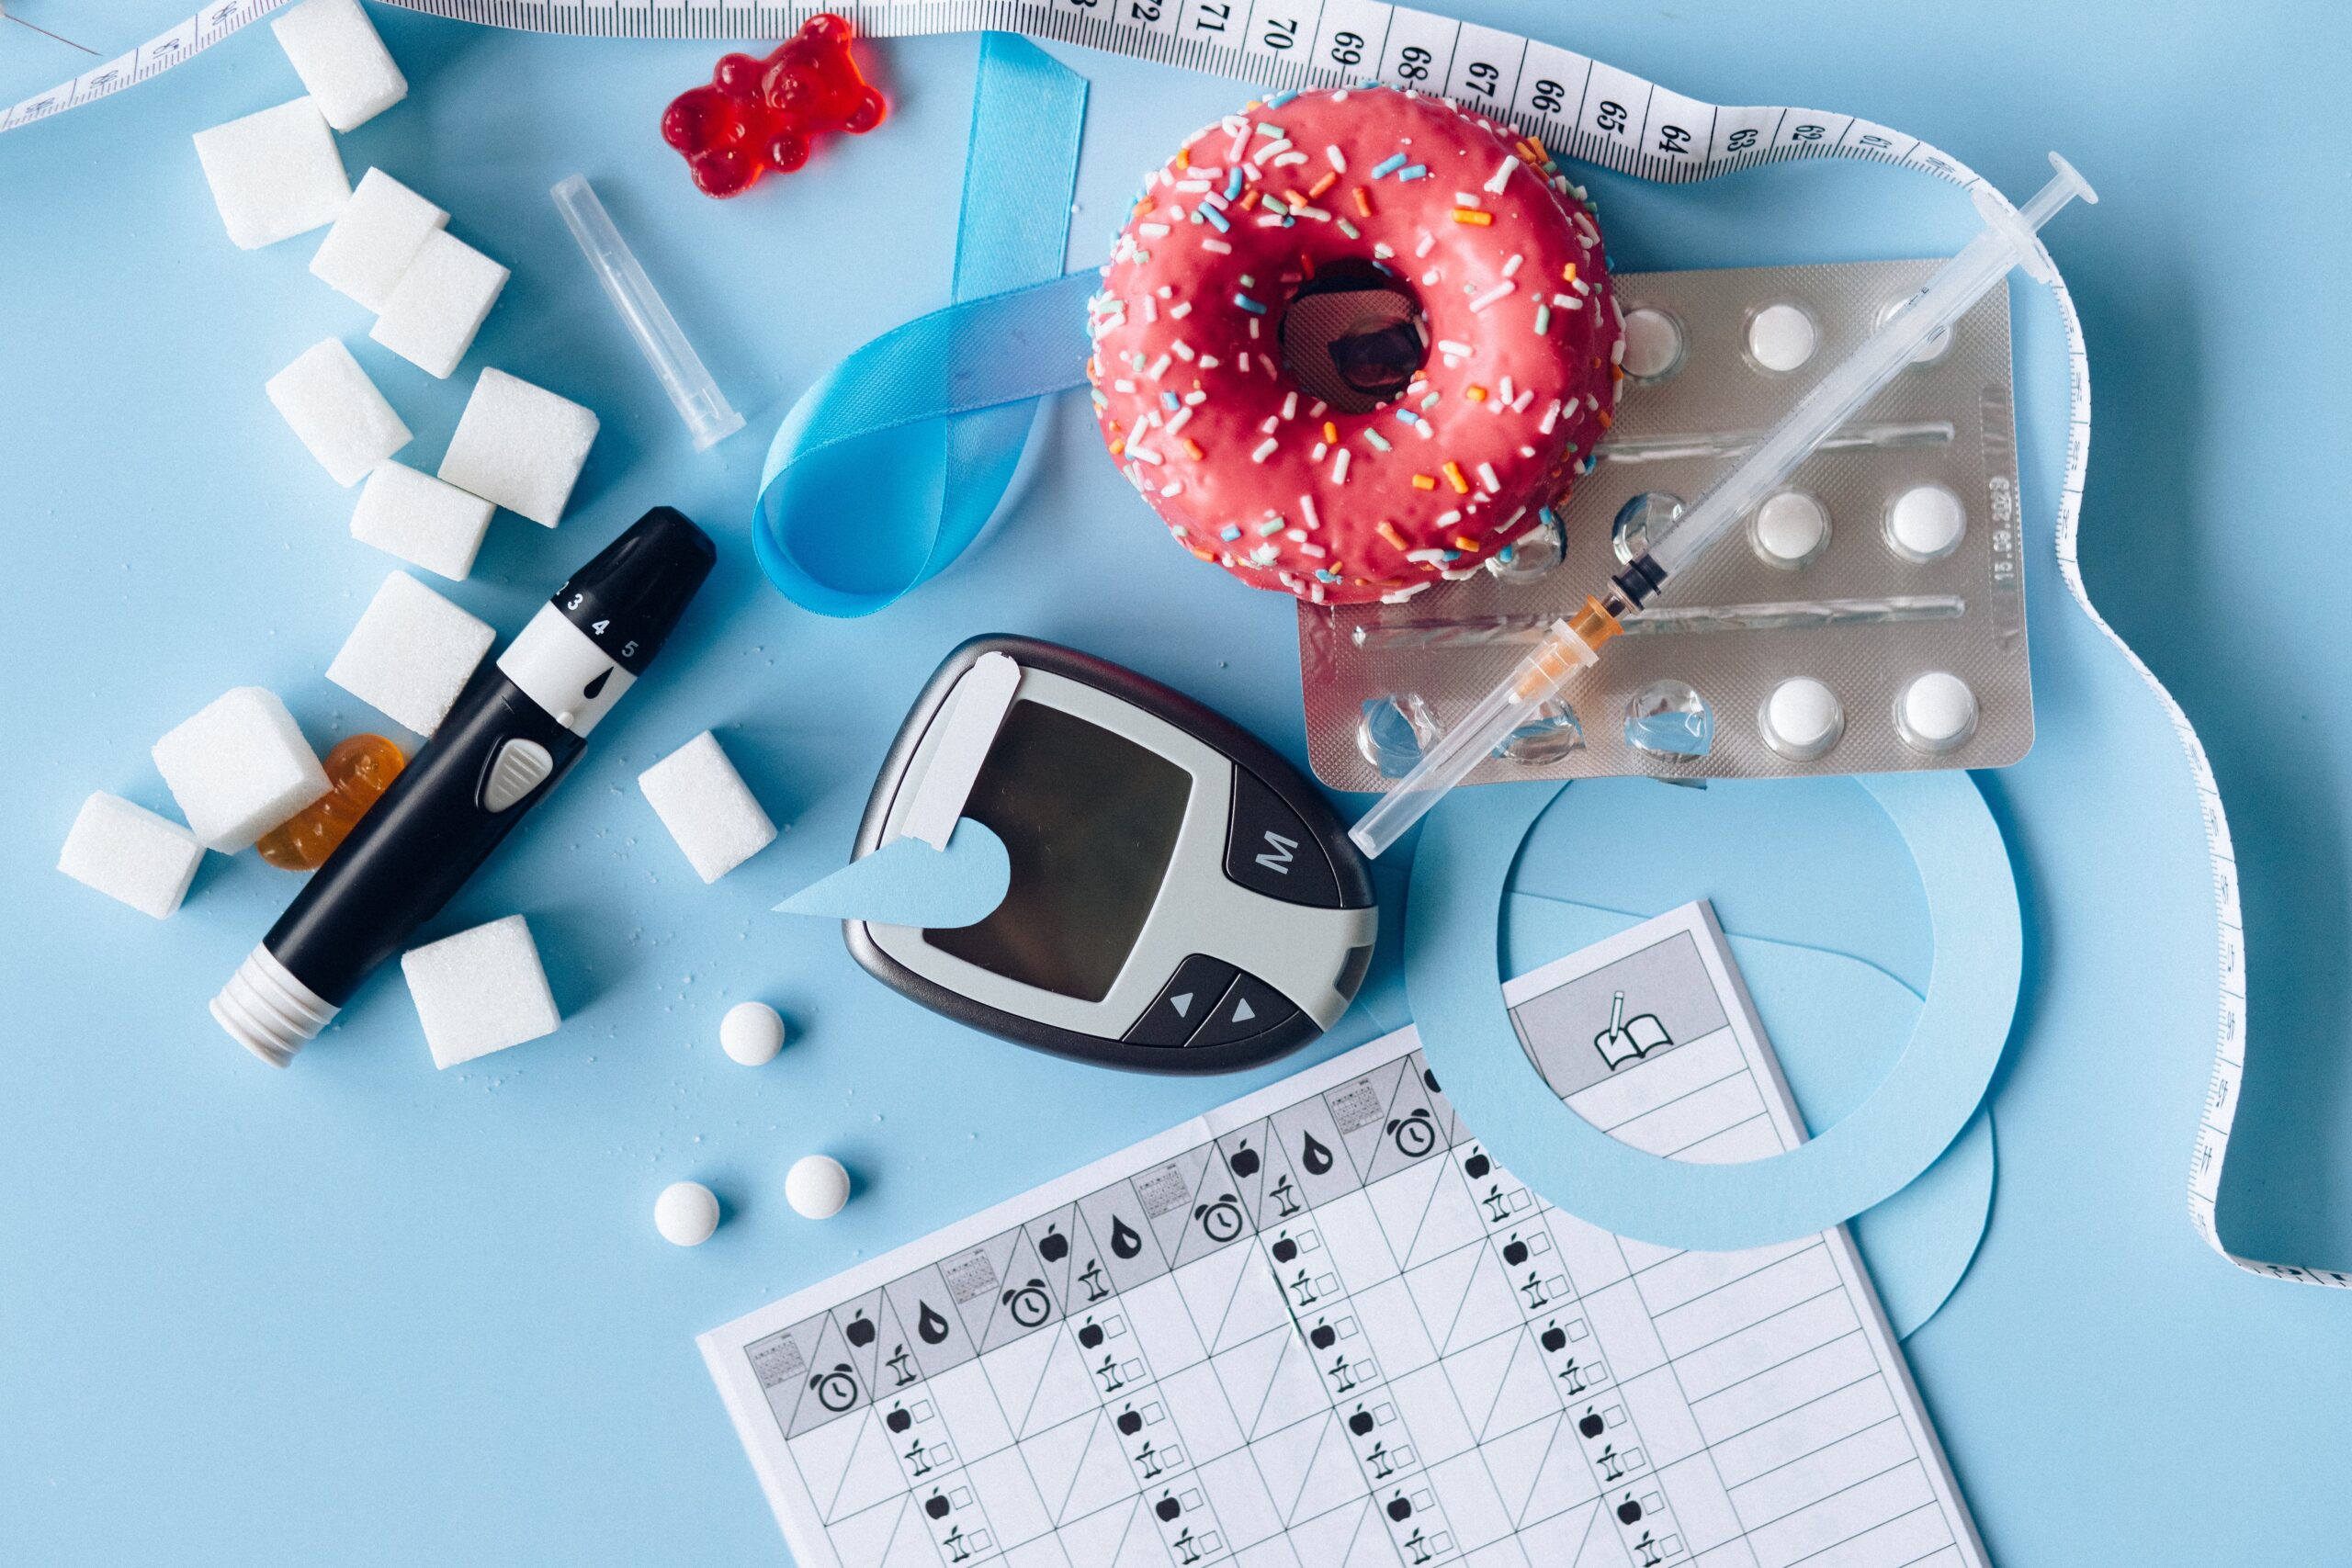 blood sugar meter, medication, and sweets